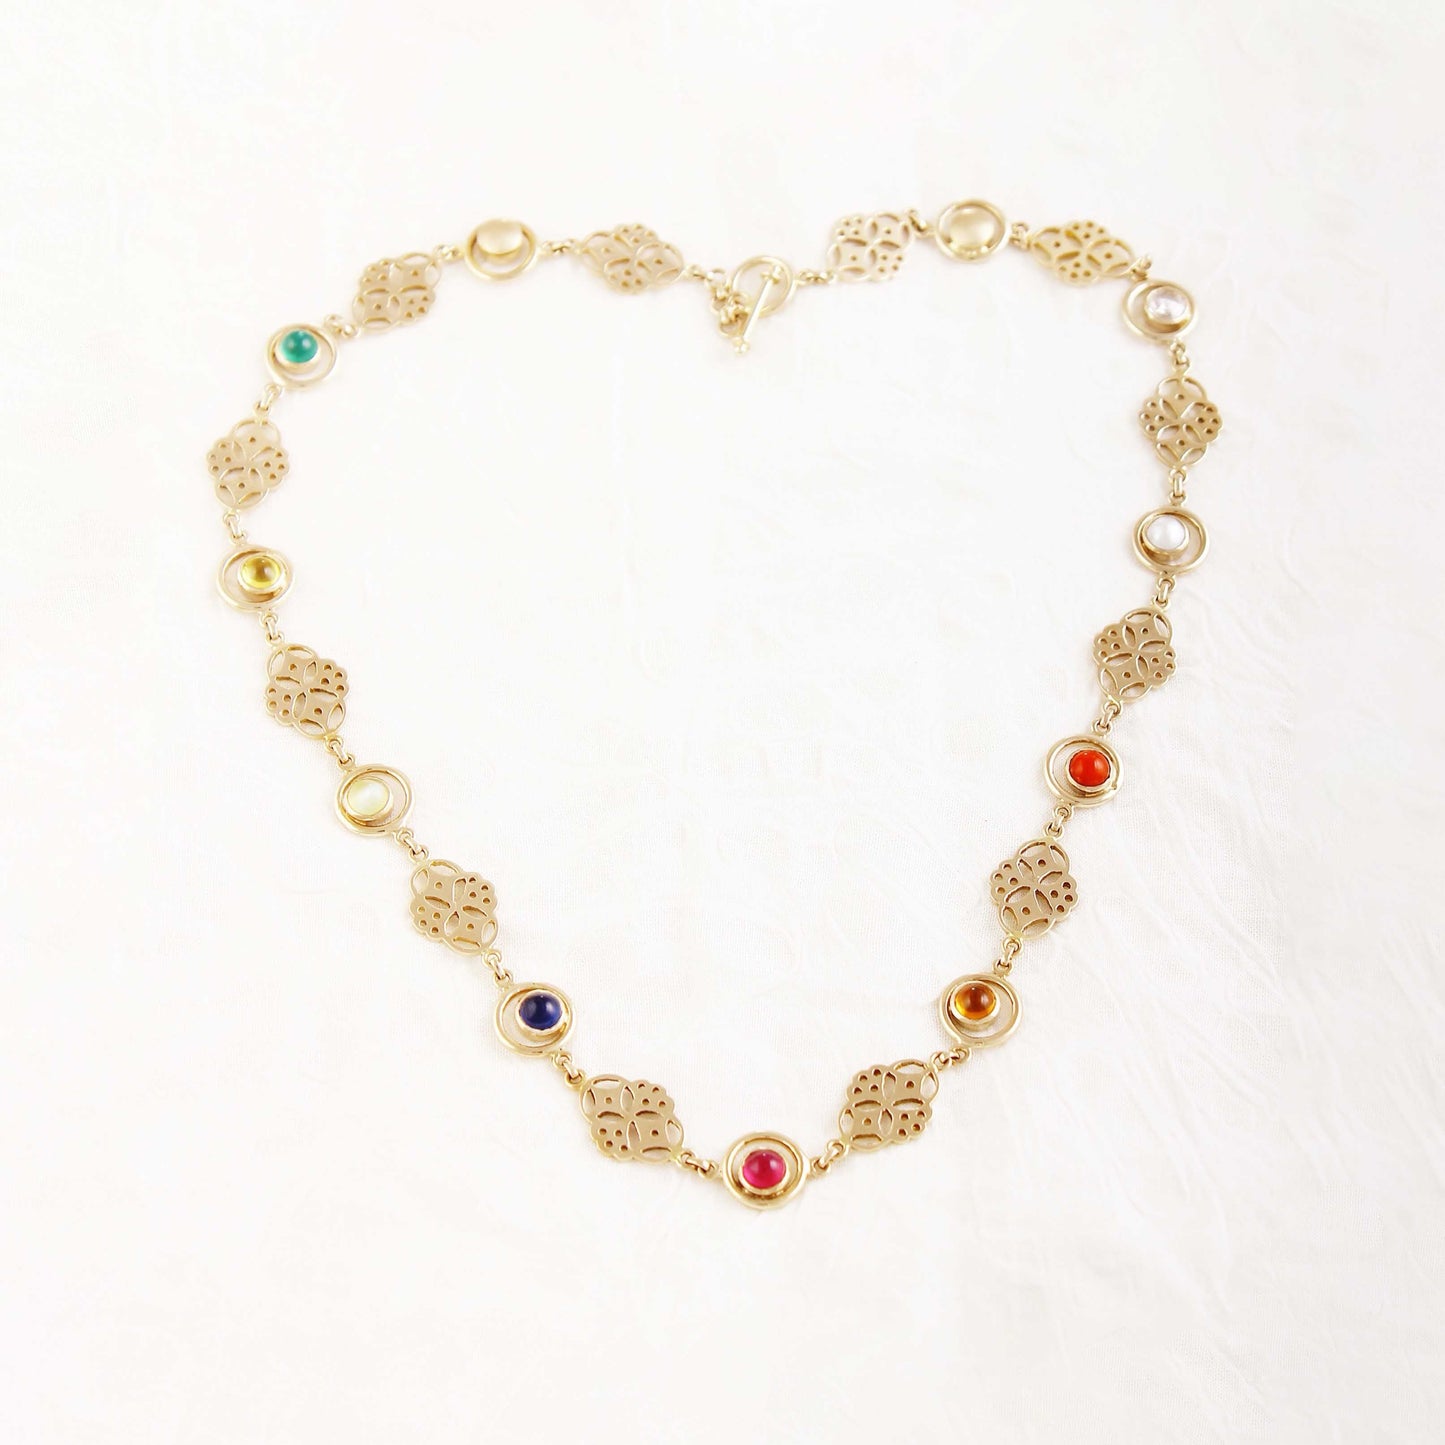 The Jaali / Lace Gold, Navratna and Diamond Necklace by Rasvihar